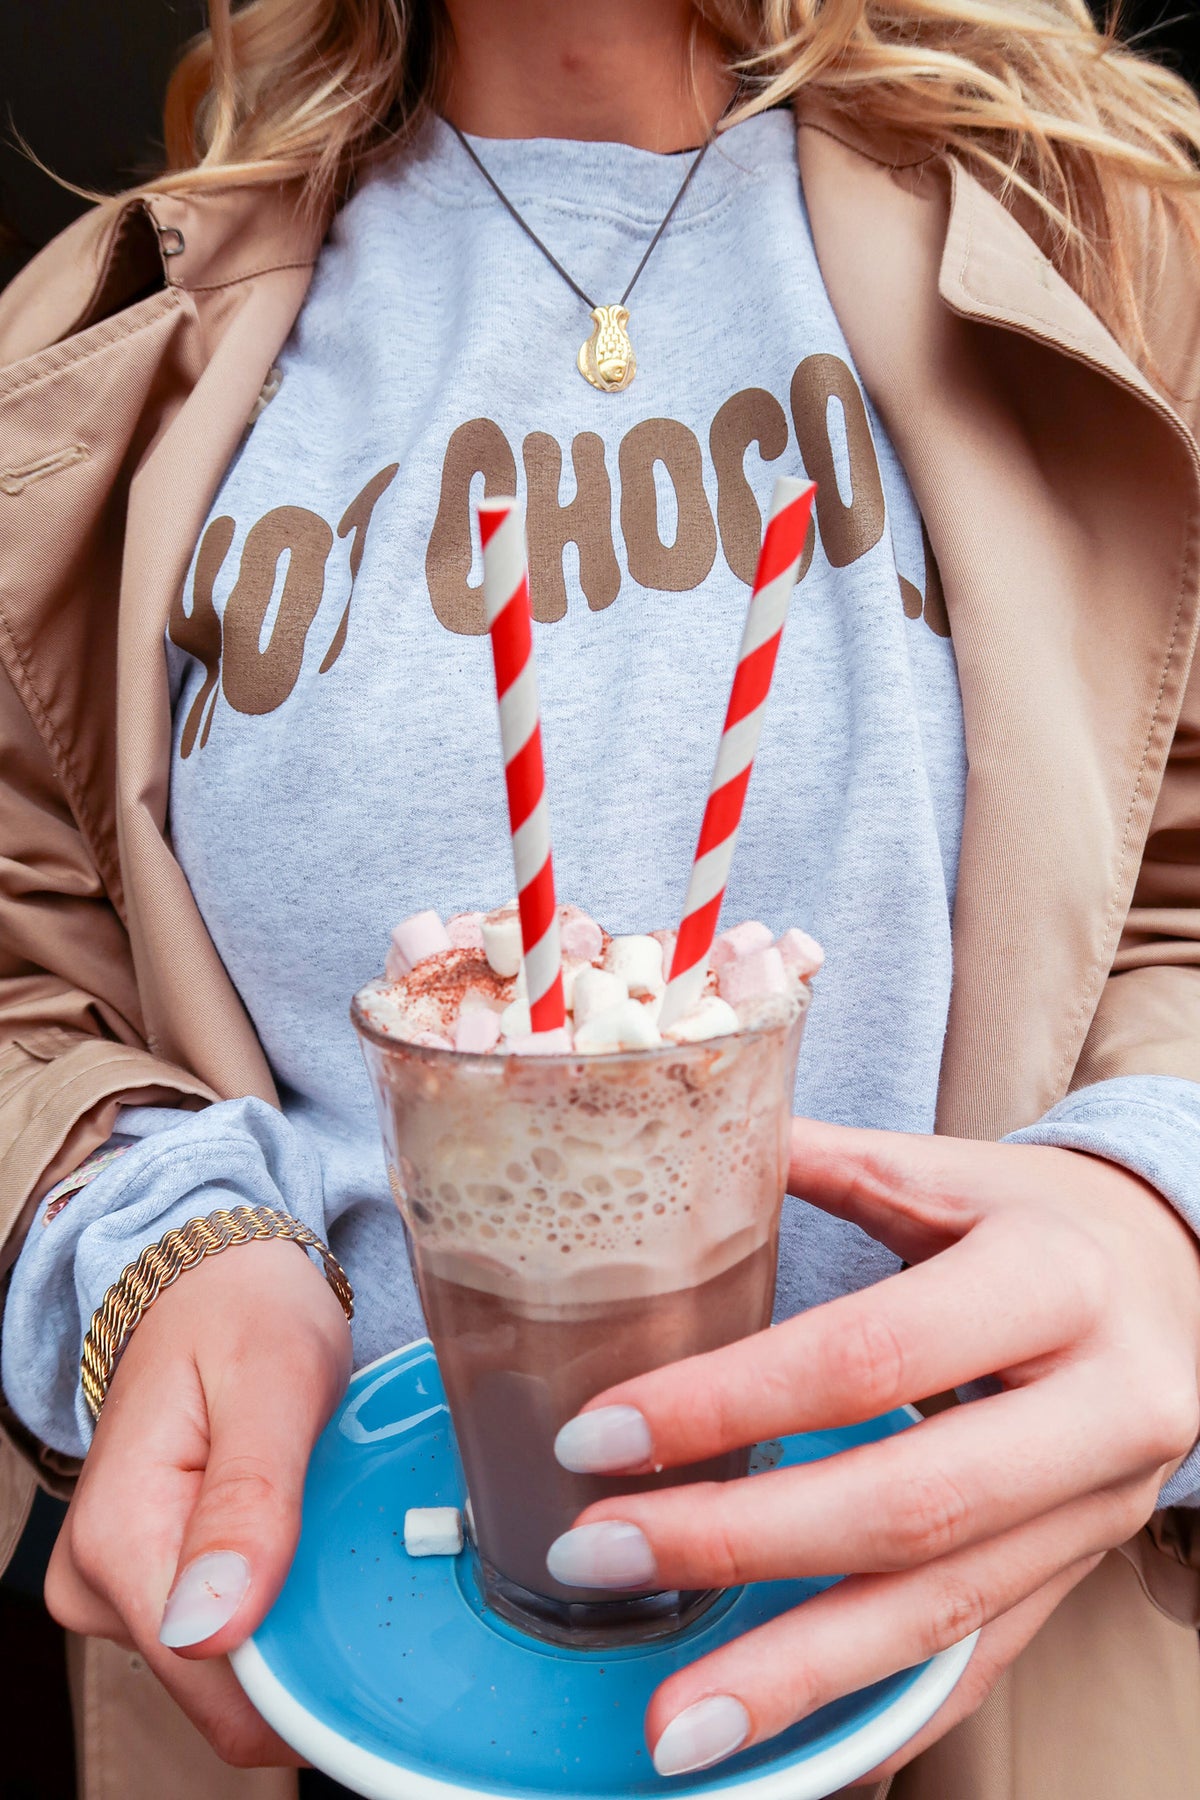 The Hot Chocolate Oversized Sweatshirt